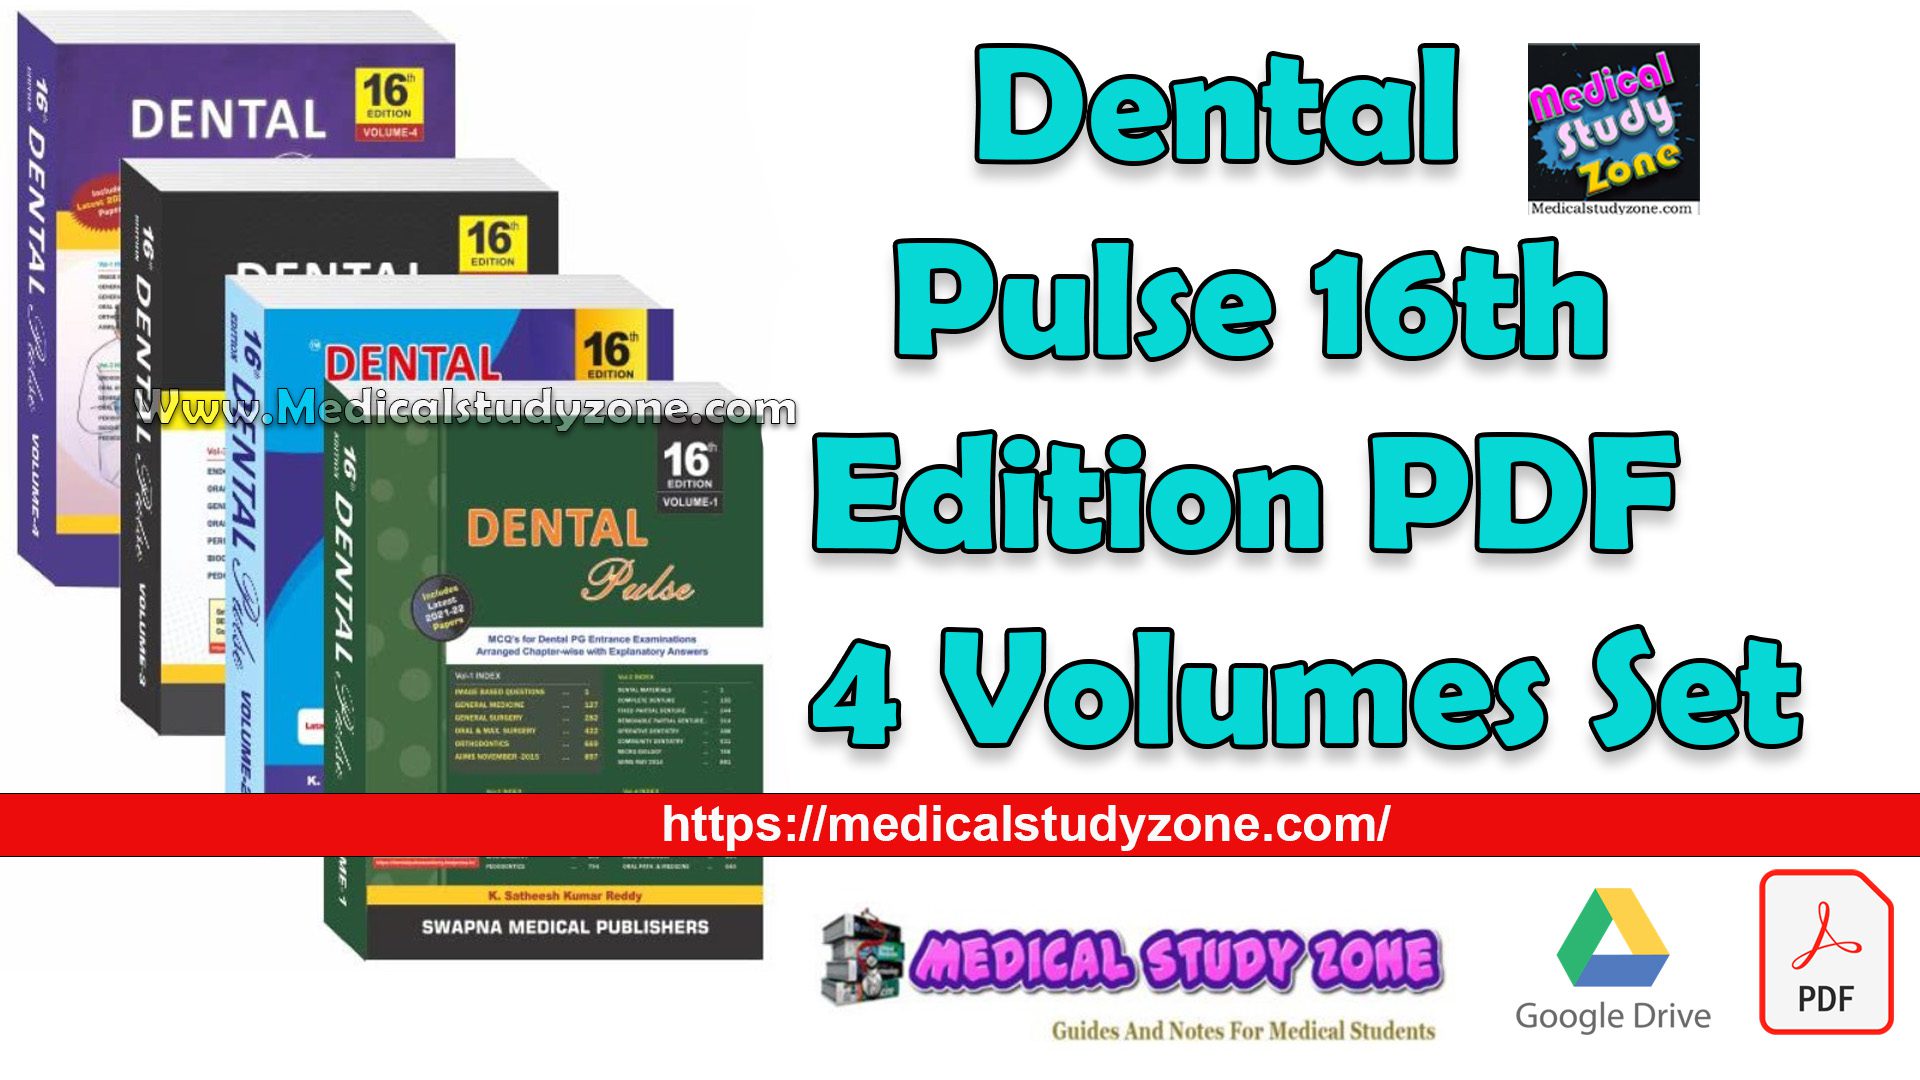 Dental Pulse 16th Edition PDF Free Download